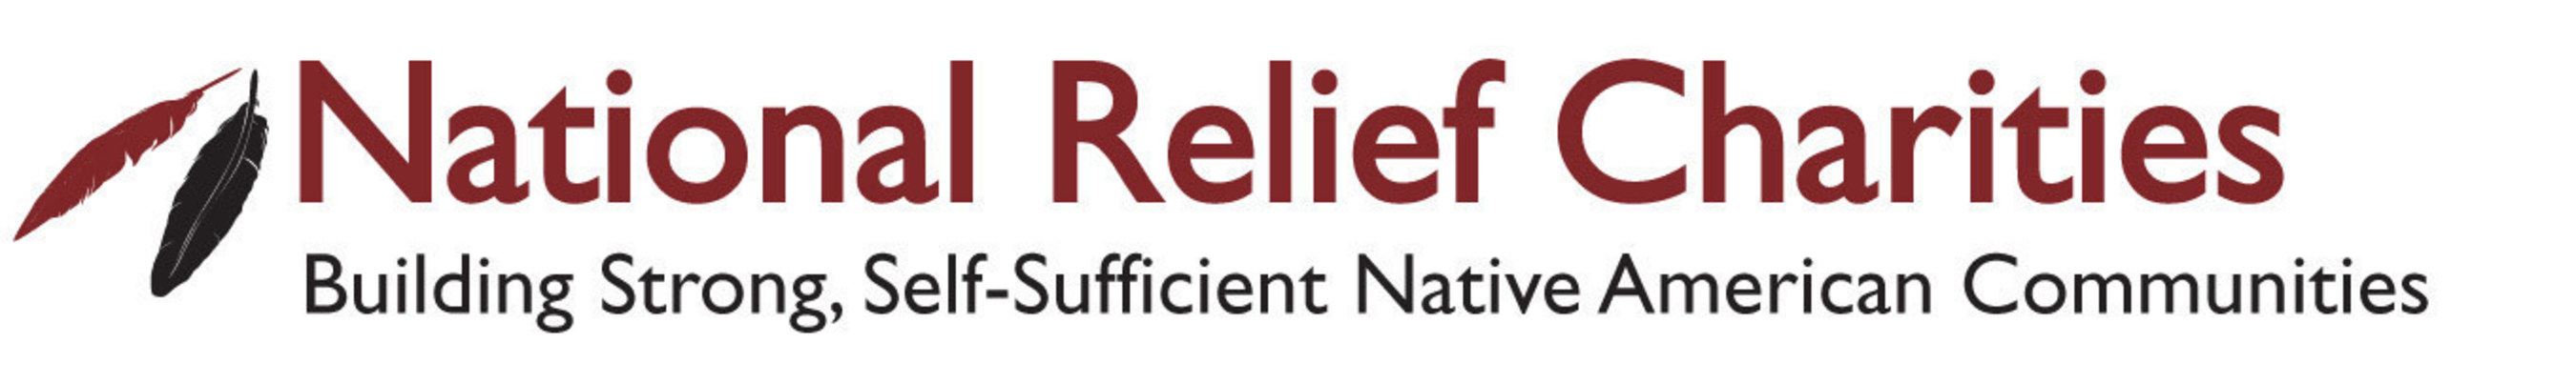 National Relief Charities logo